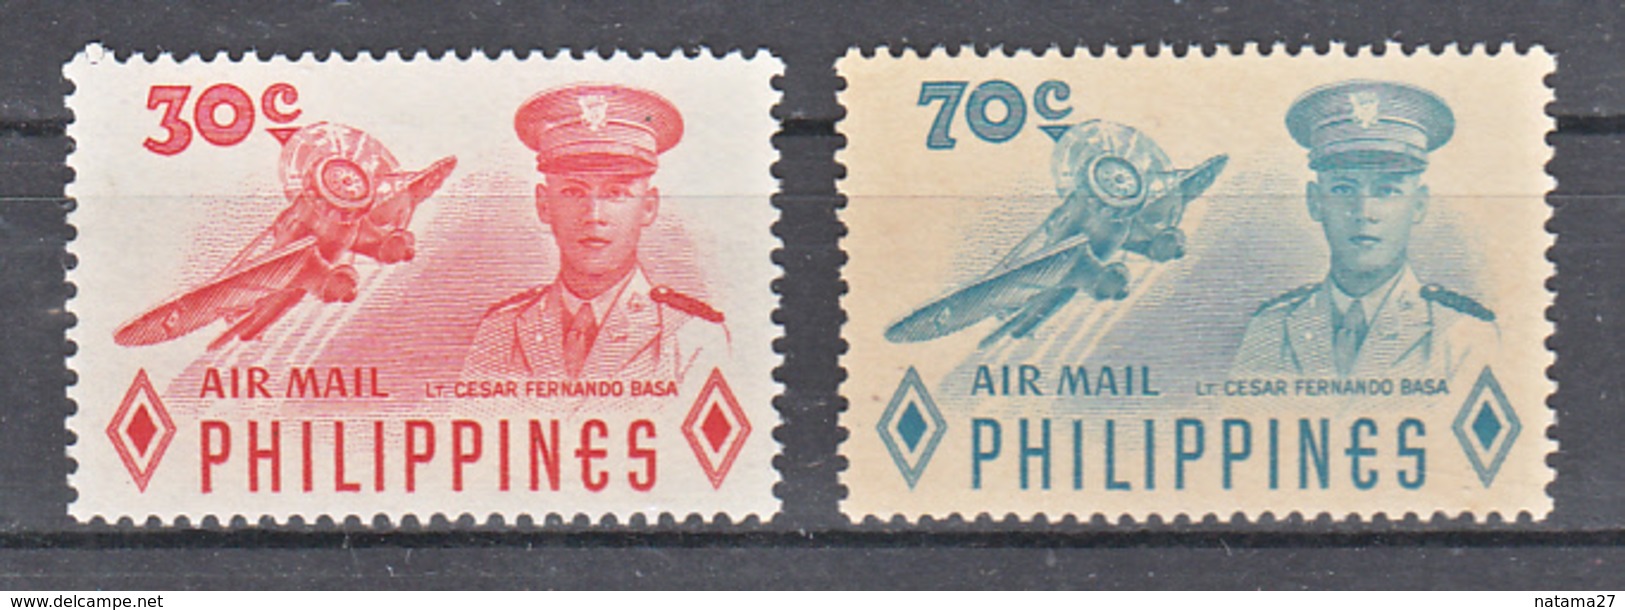 Filippine Philippines Philippinen Filipinas 1955 Lieutenant Cesar Basa, Air Mail Set Of 2 Stamps, Toned Gum - MNH** - Filippine